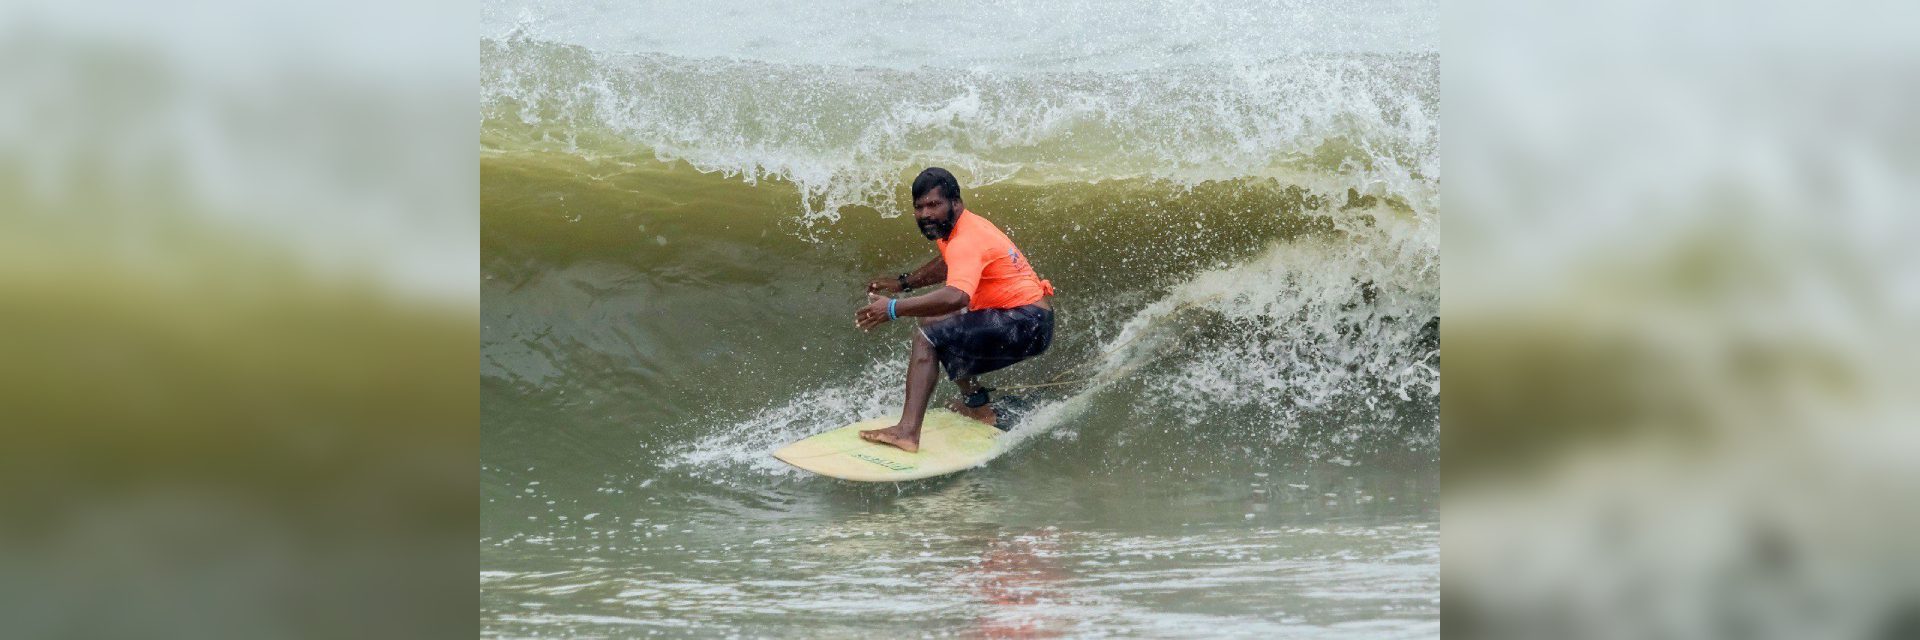 Wave Rider: Murthy Megavan ชาวประมงตัวน้อยจากเมือง Chennai's Covelong กลายเป็นนักท่องที่ยอดเยี่ยมได้อย่างไร